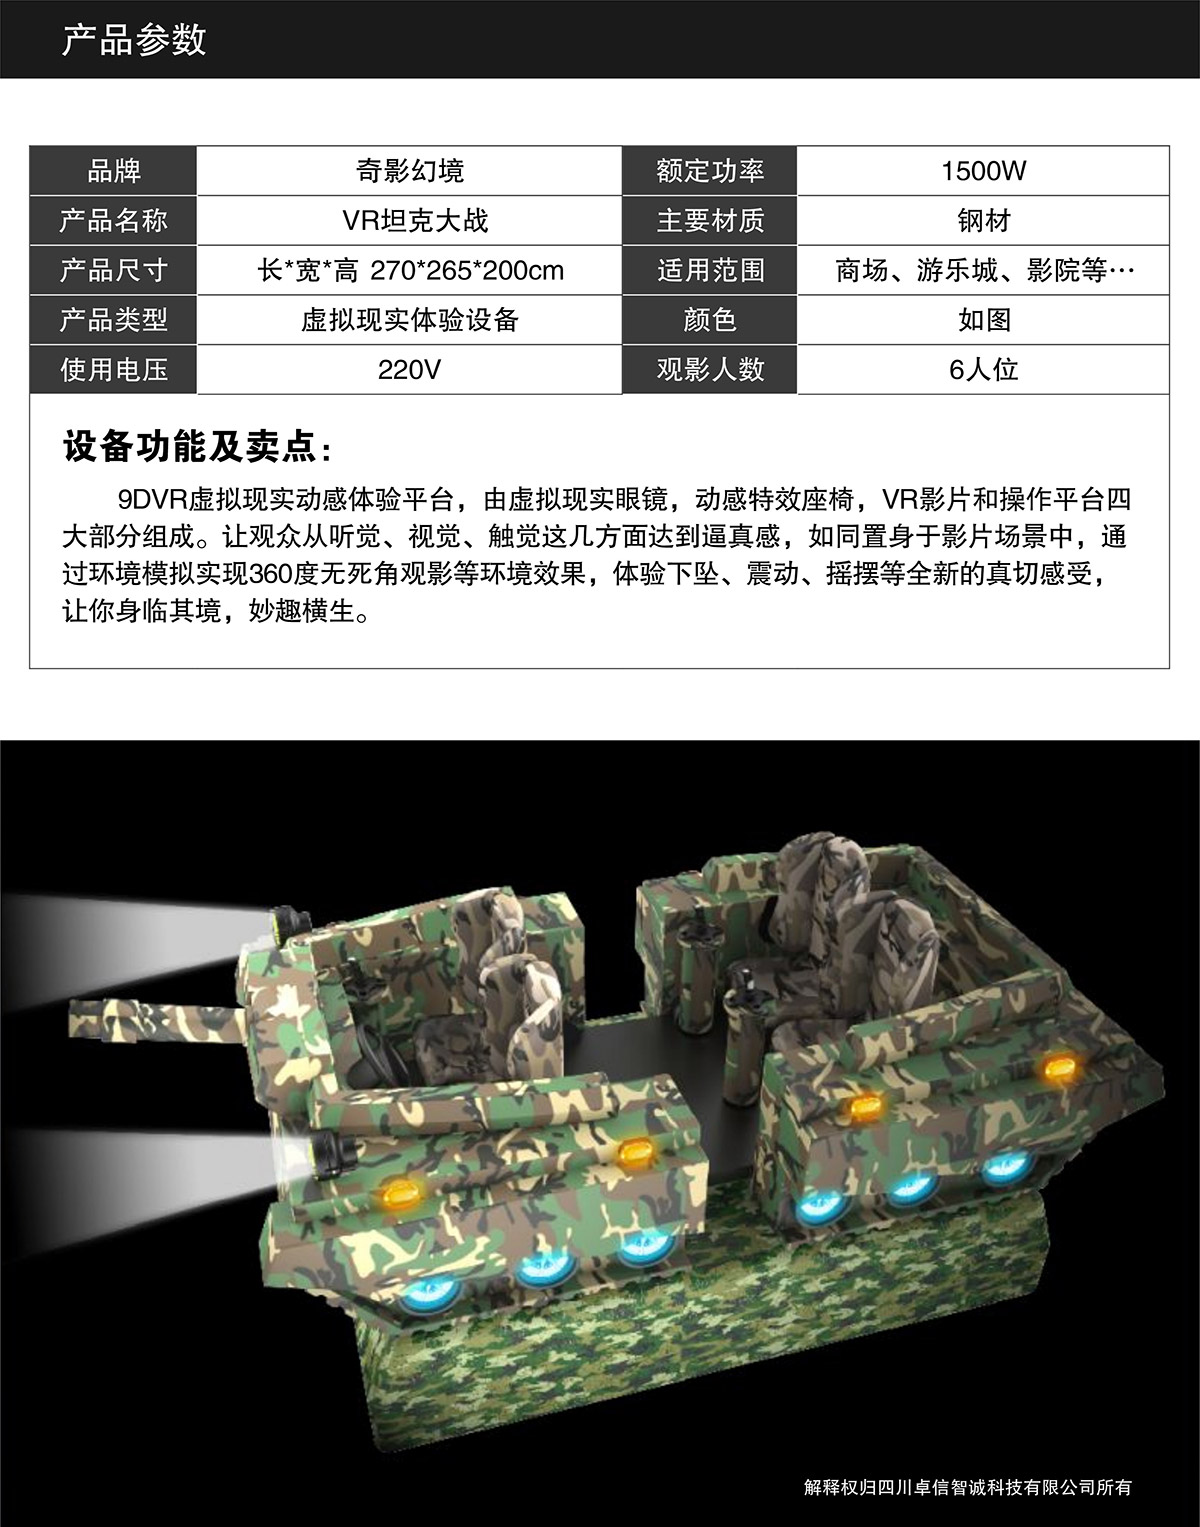 02-VR坦克大戰產品參數.jpg